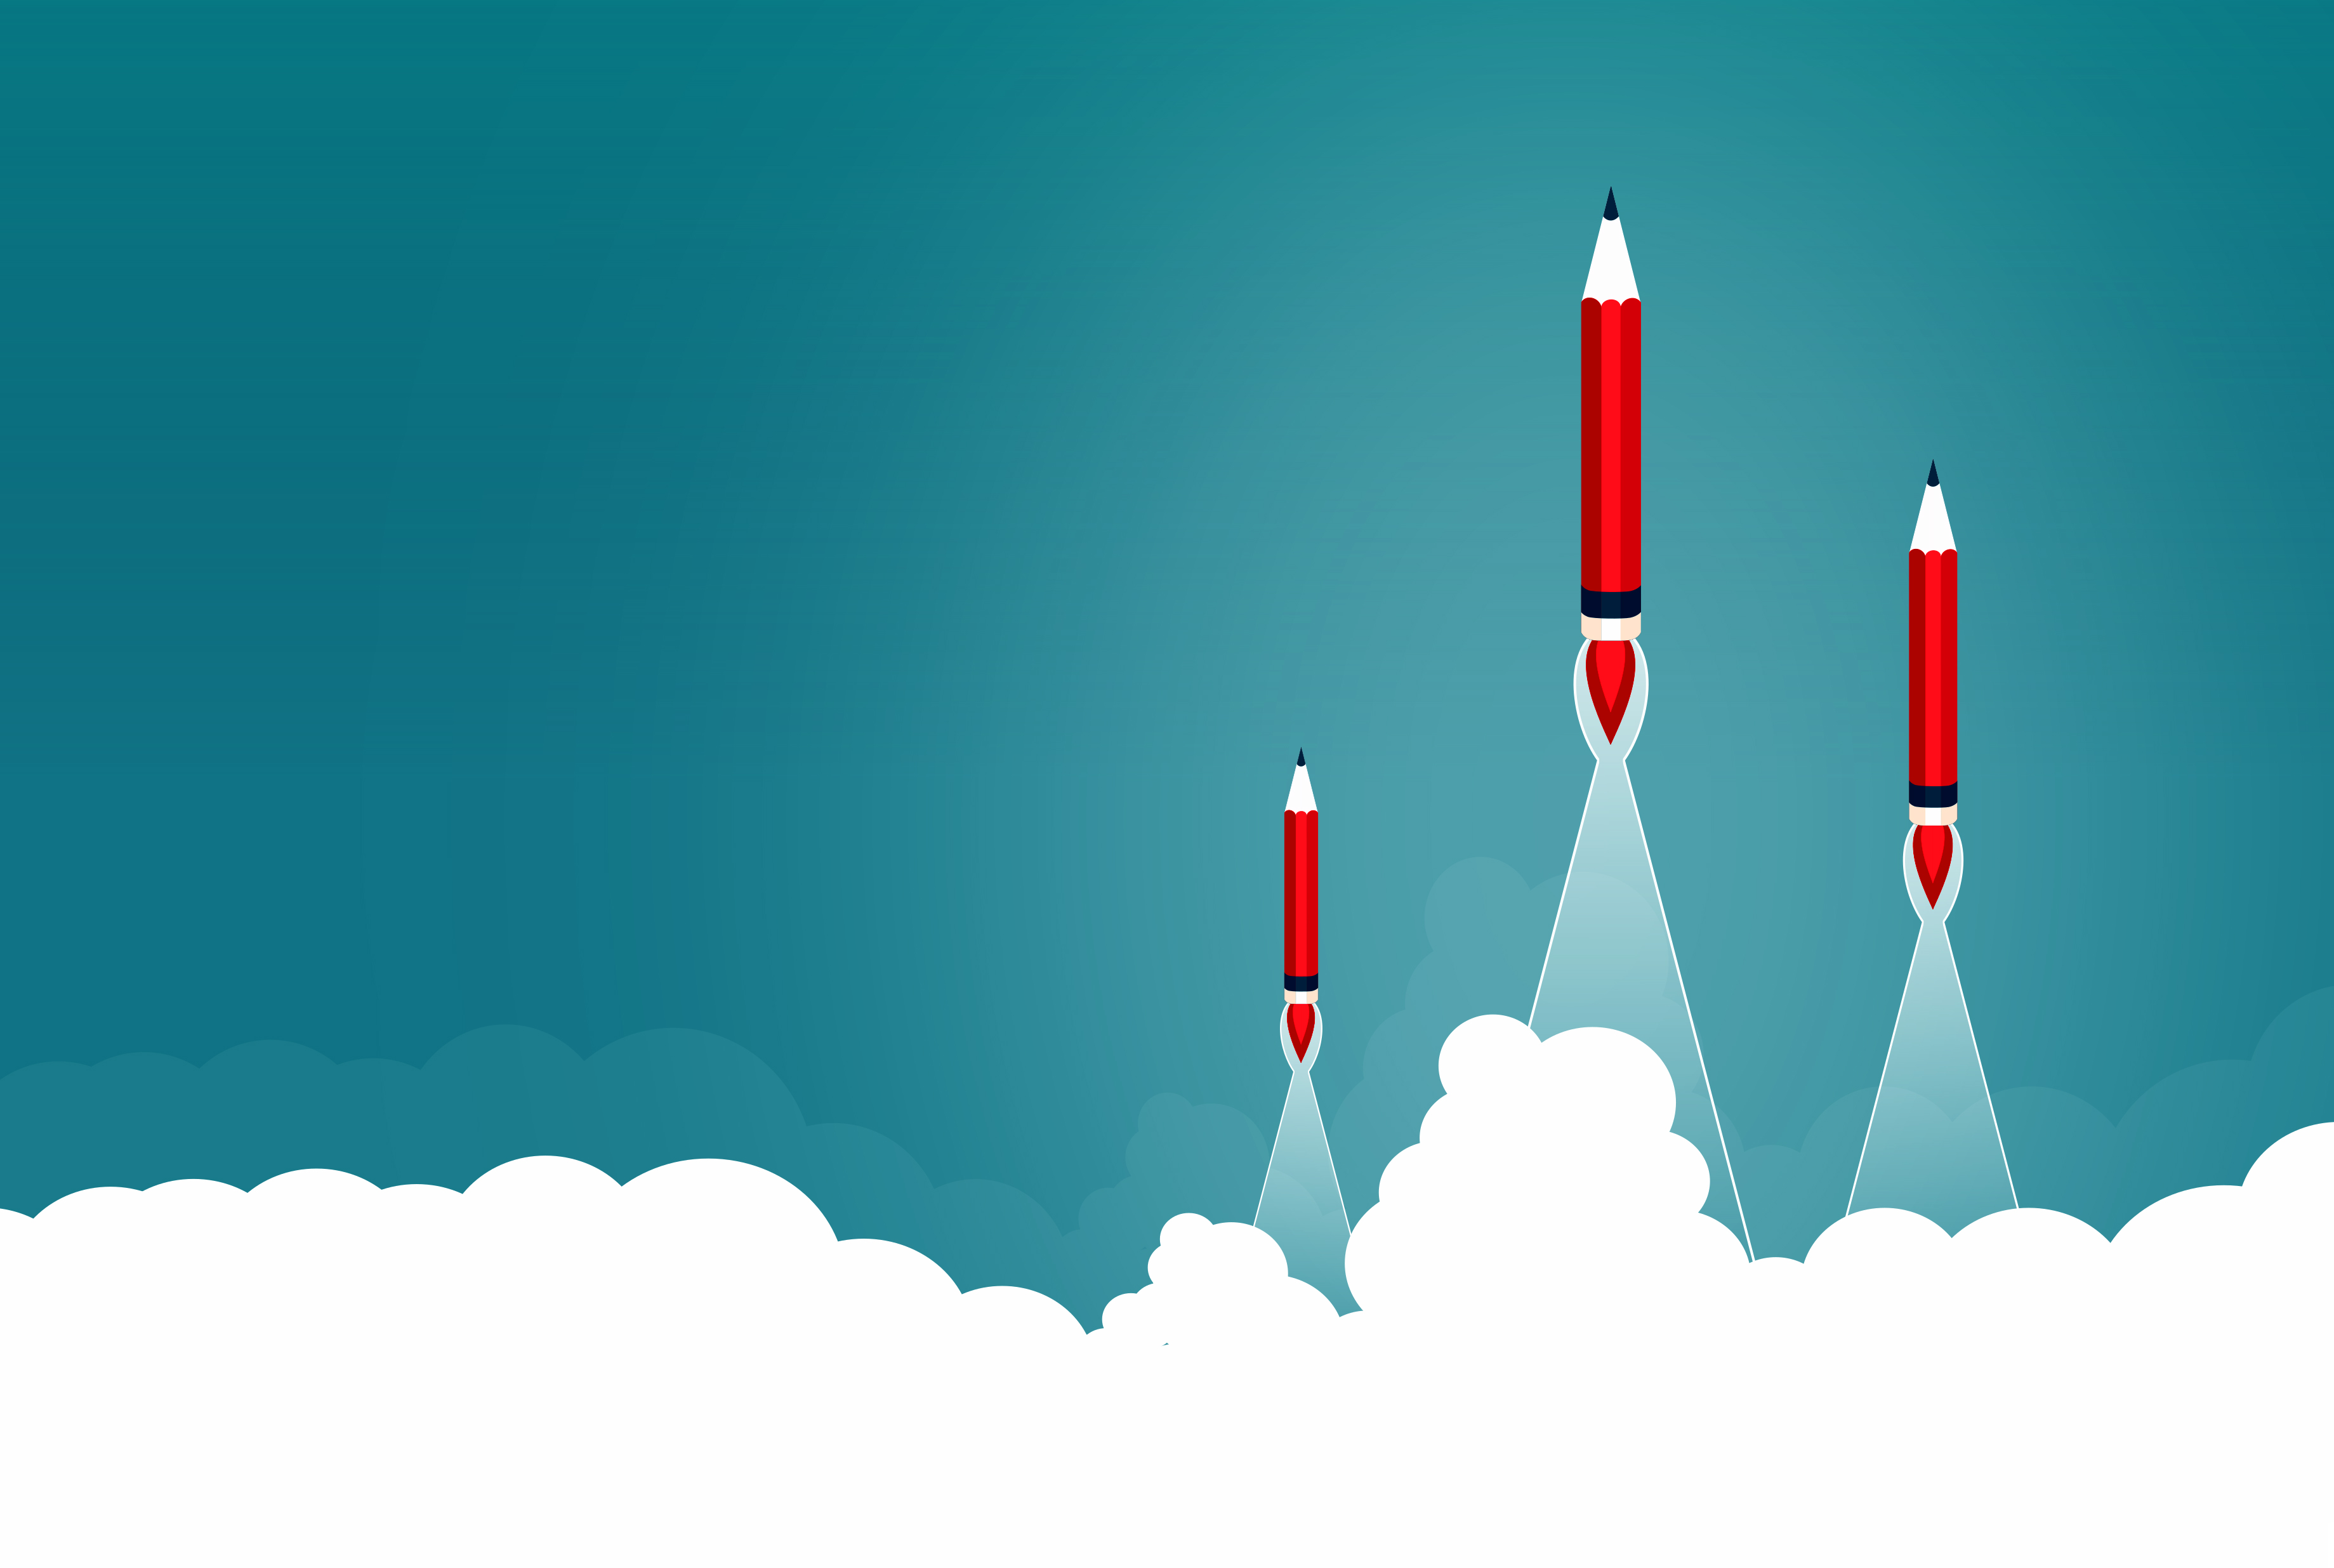 Creative Start and Start-Up Concept with Rocket Pencils, Achievement, School, Light, Marketing, HQ Photo